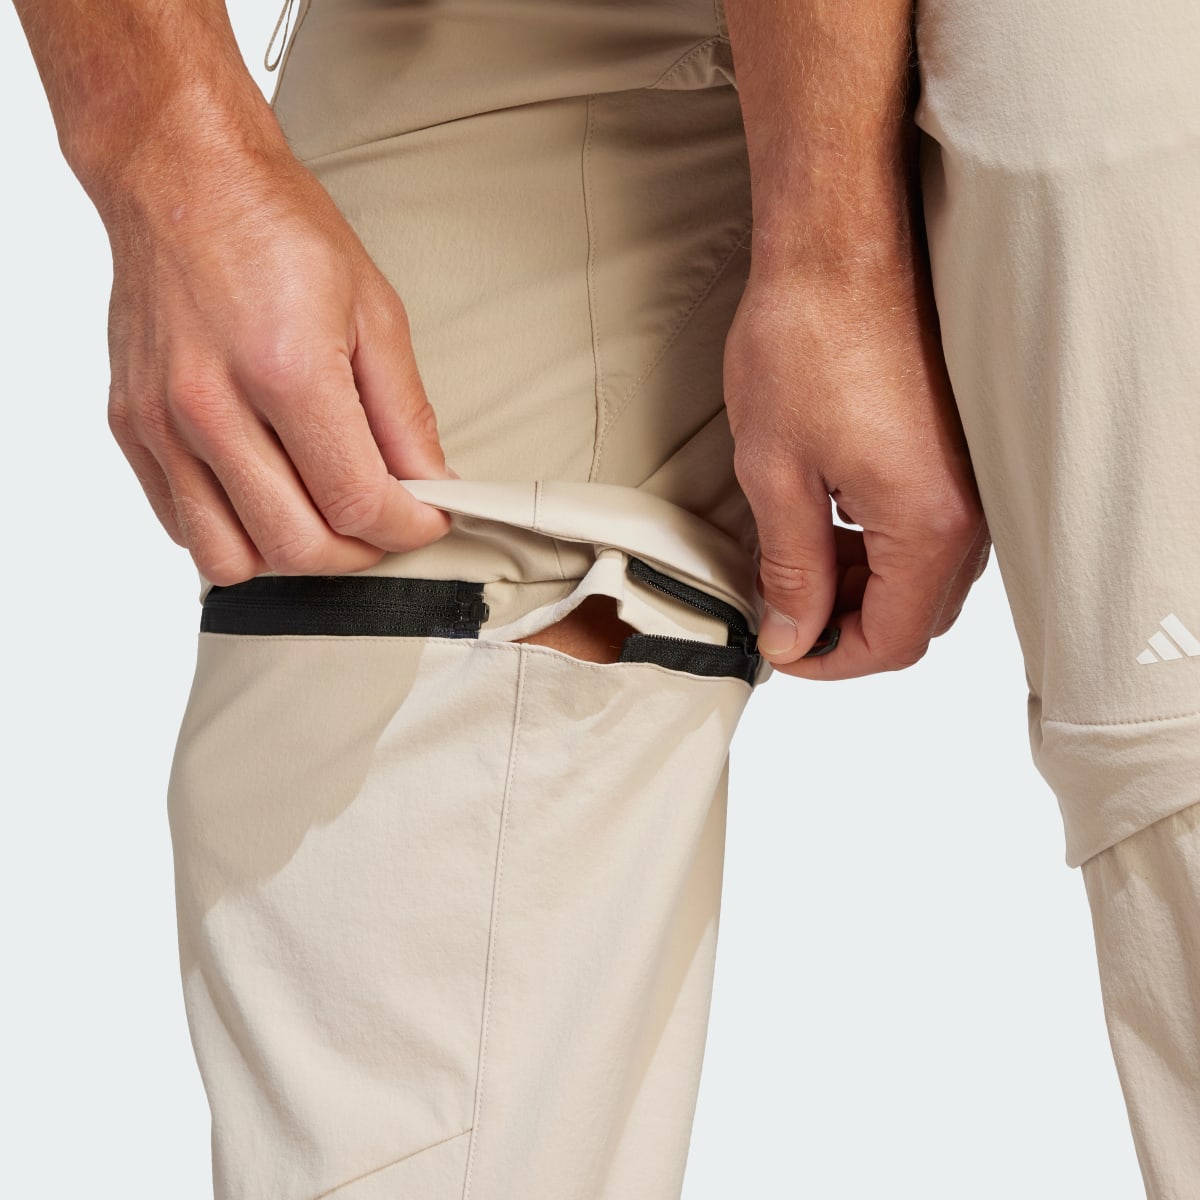 Adidas Terrex Utilitas Hiking Zip-Off Pants. 9